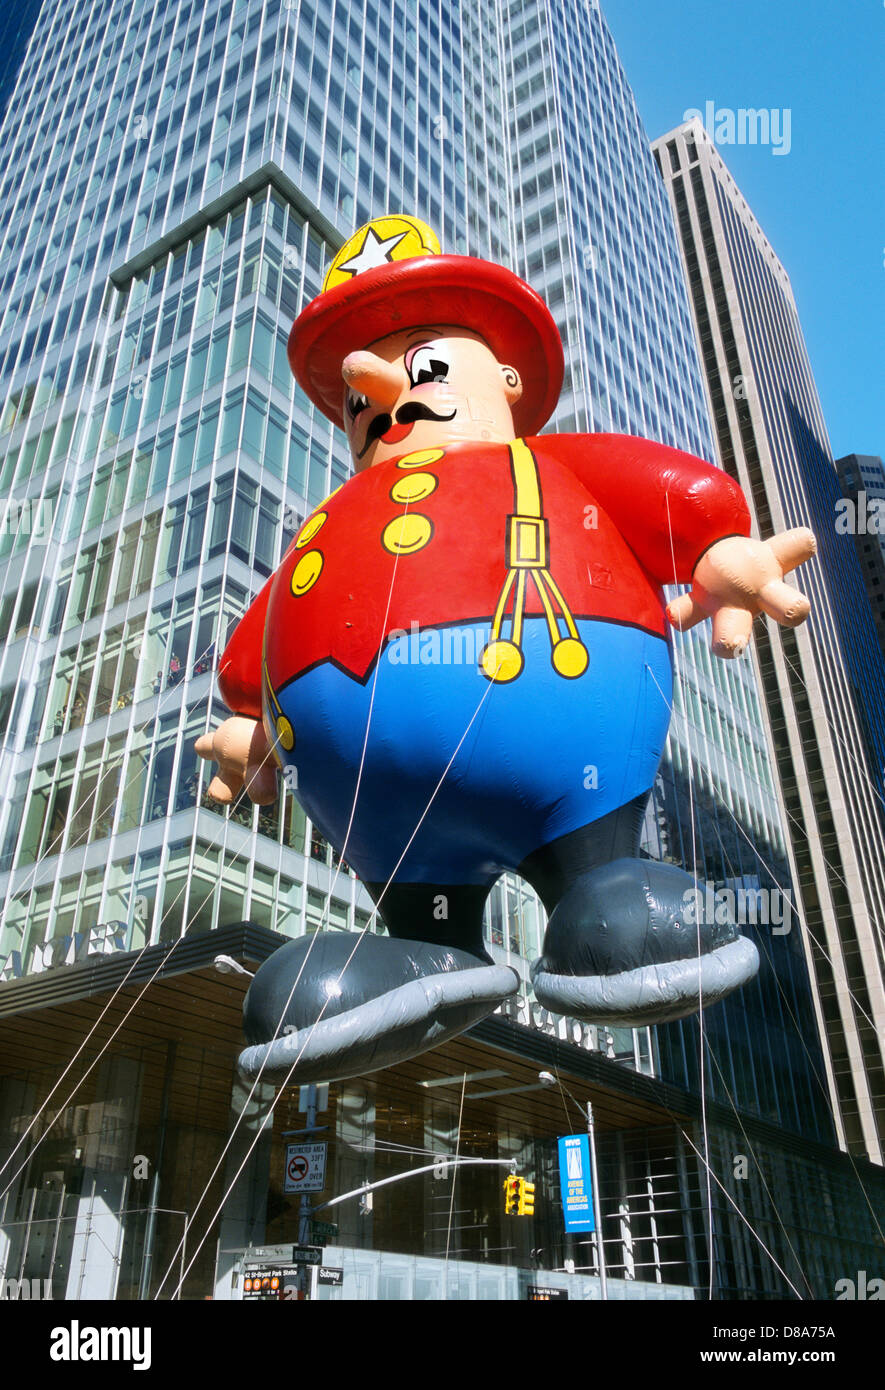 Macy's Thanksgiving Day Parade New York City Harold the Fireman balloon. Comic strip character. Traditional holiday festivities. Stock Photo